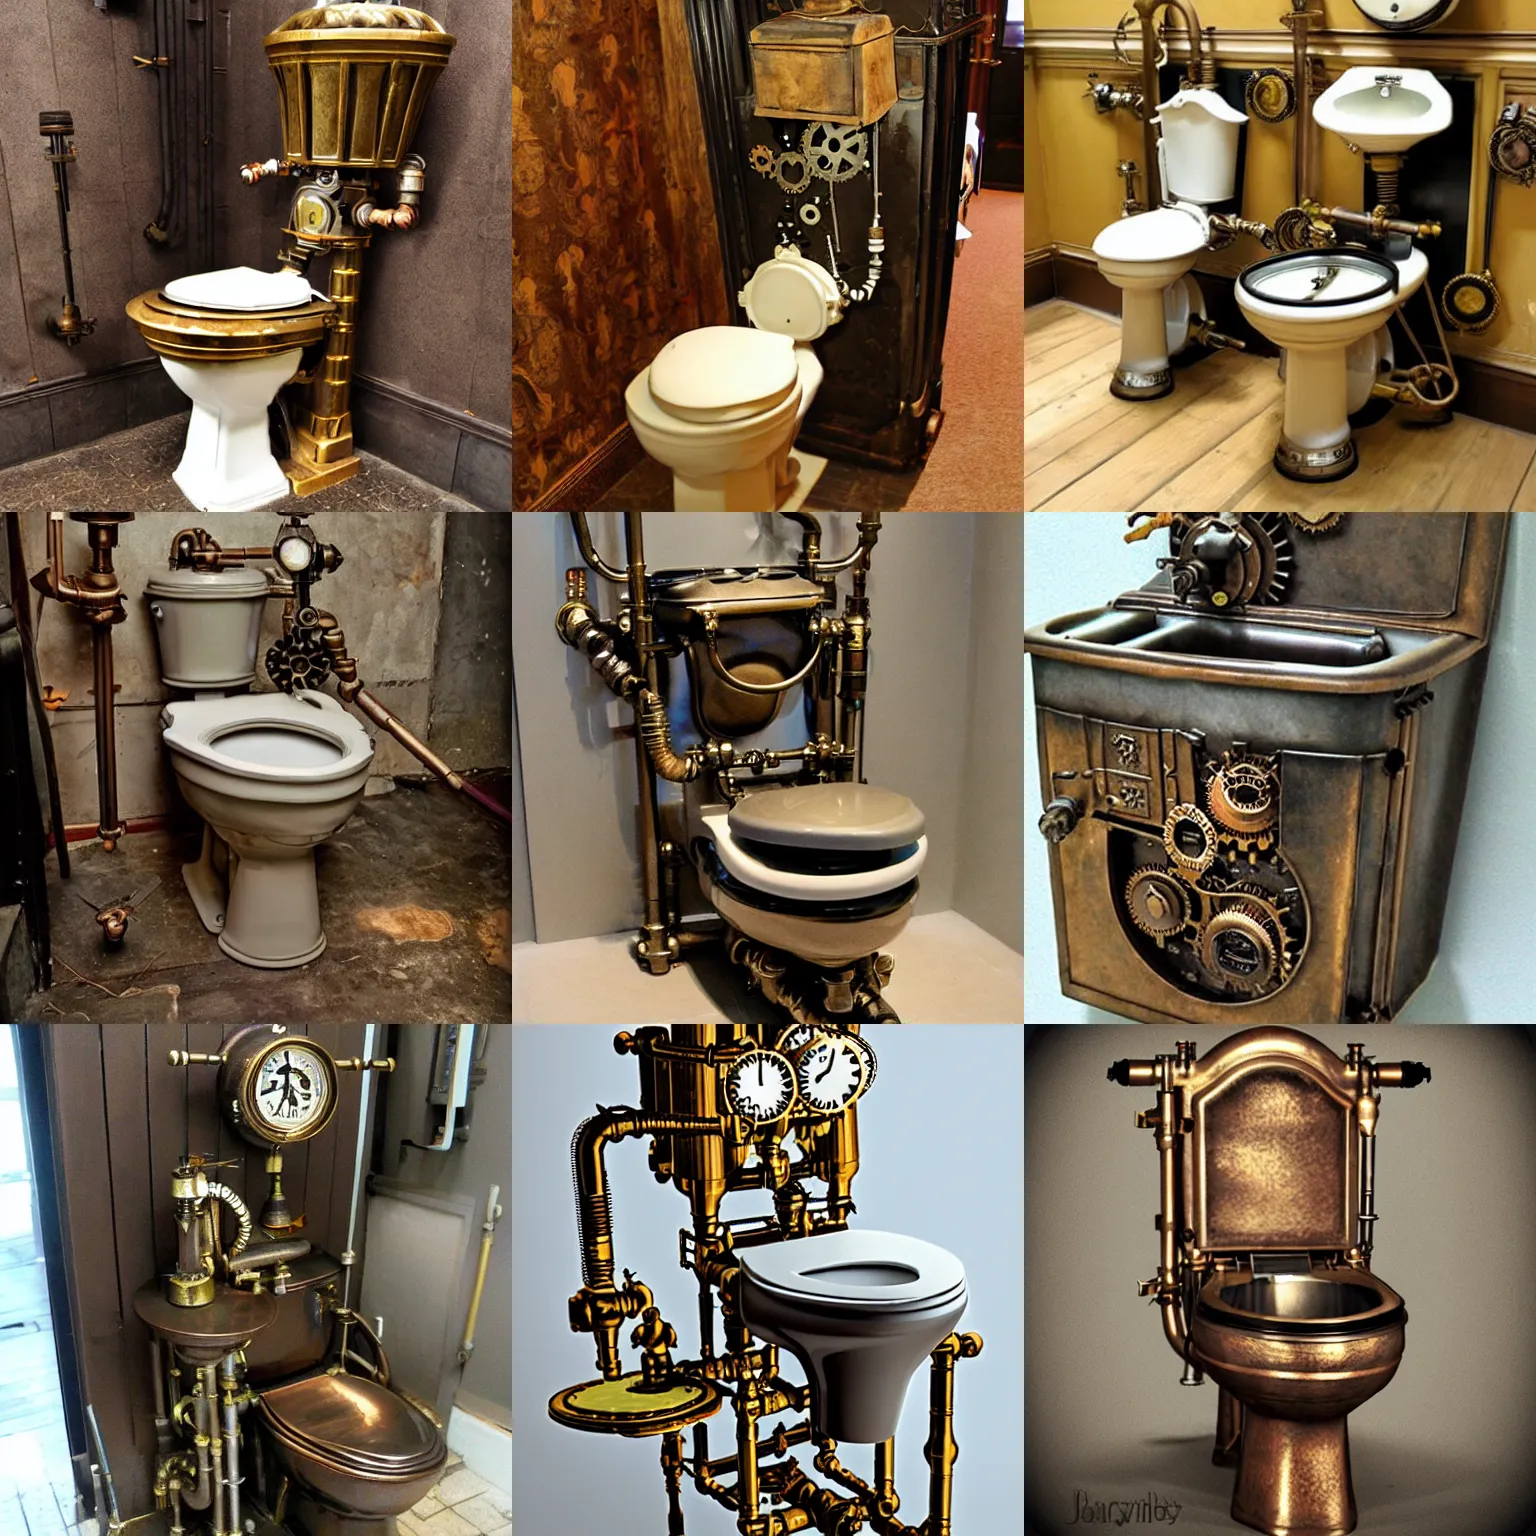 Prompt: steampunk toilet